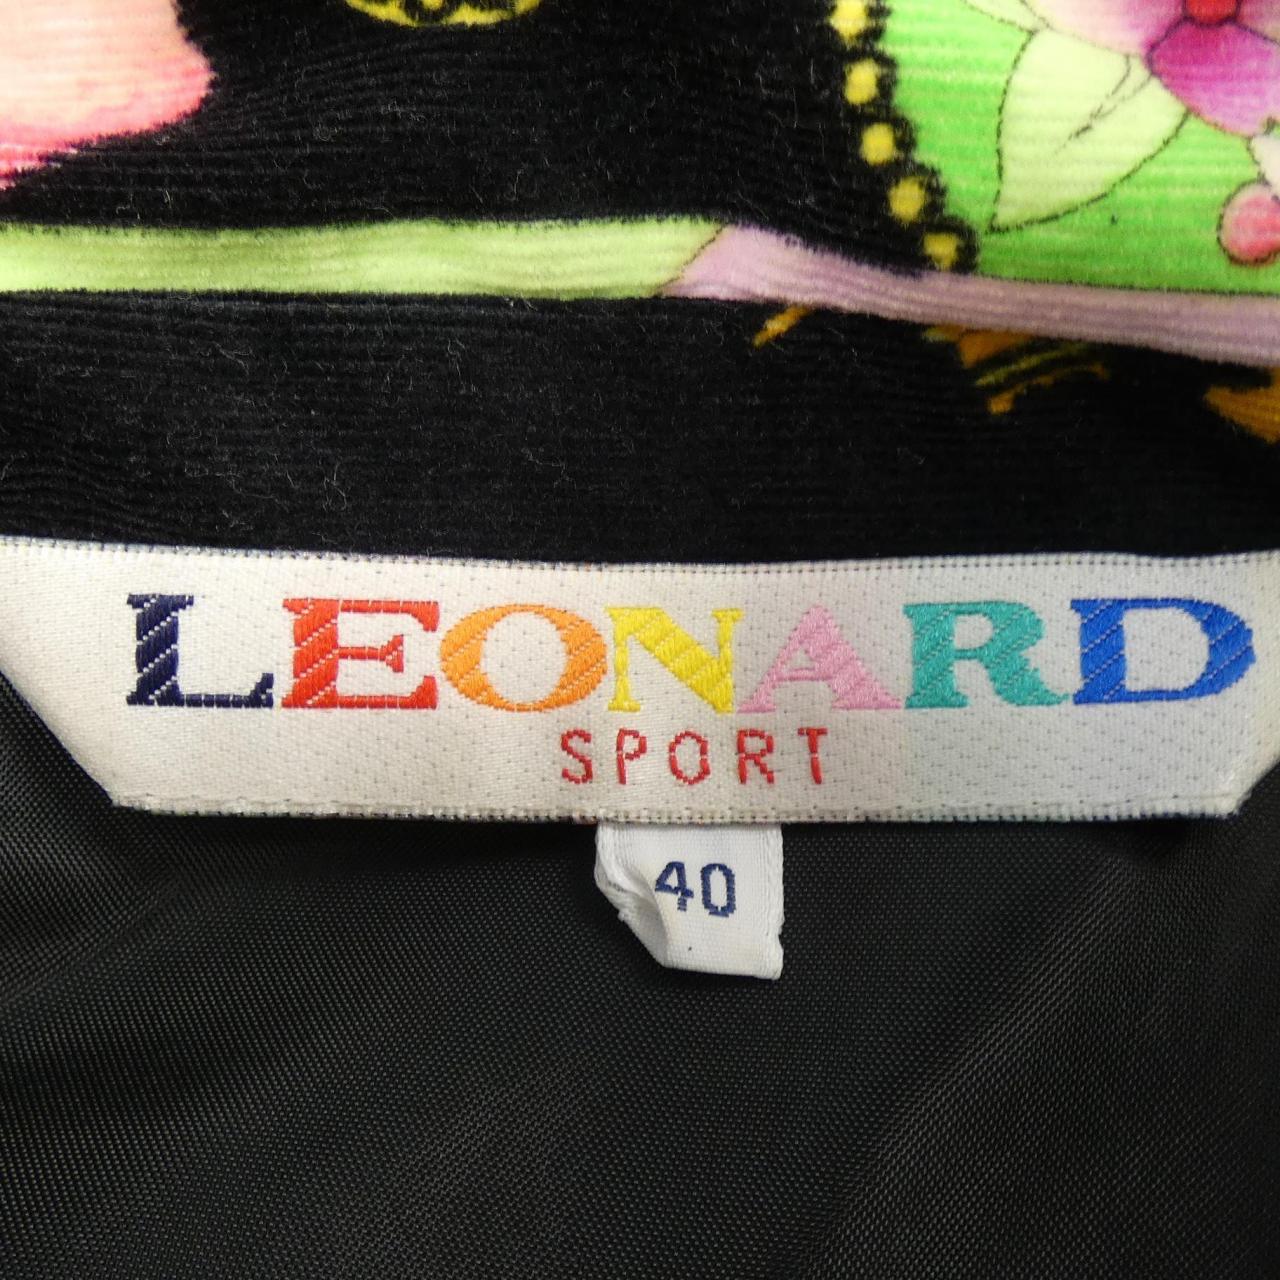 LEONARD SPORT LEONARD SPORT shirt